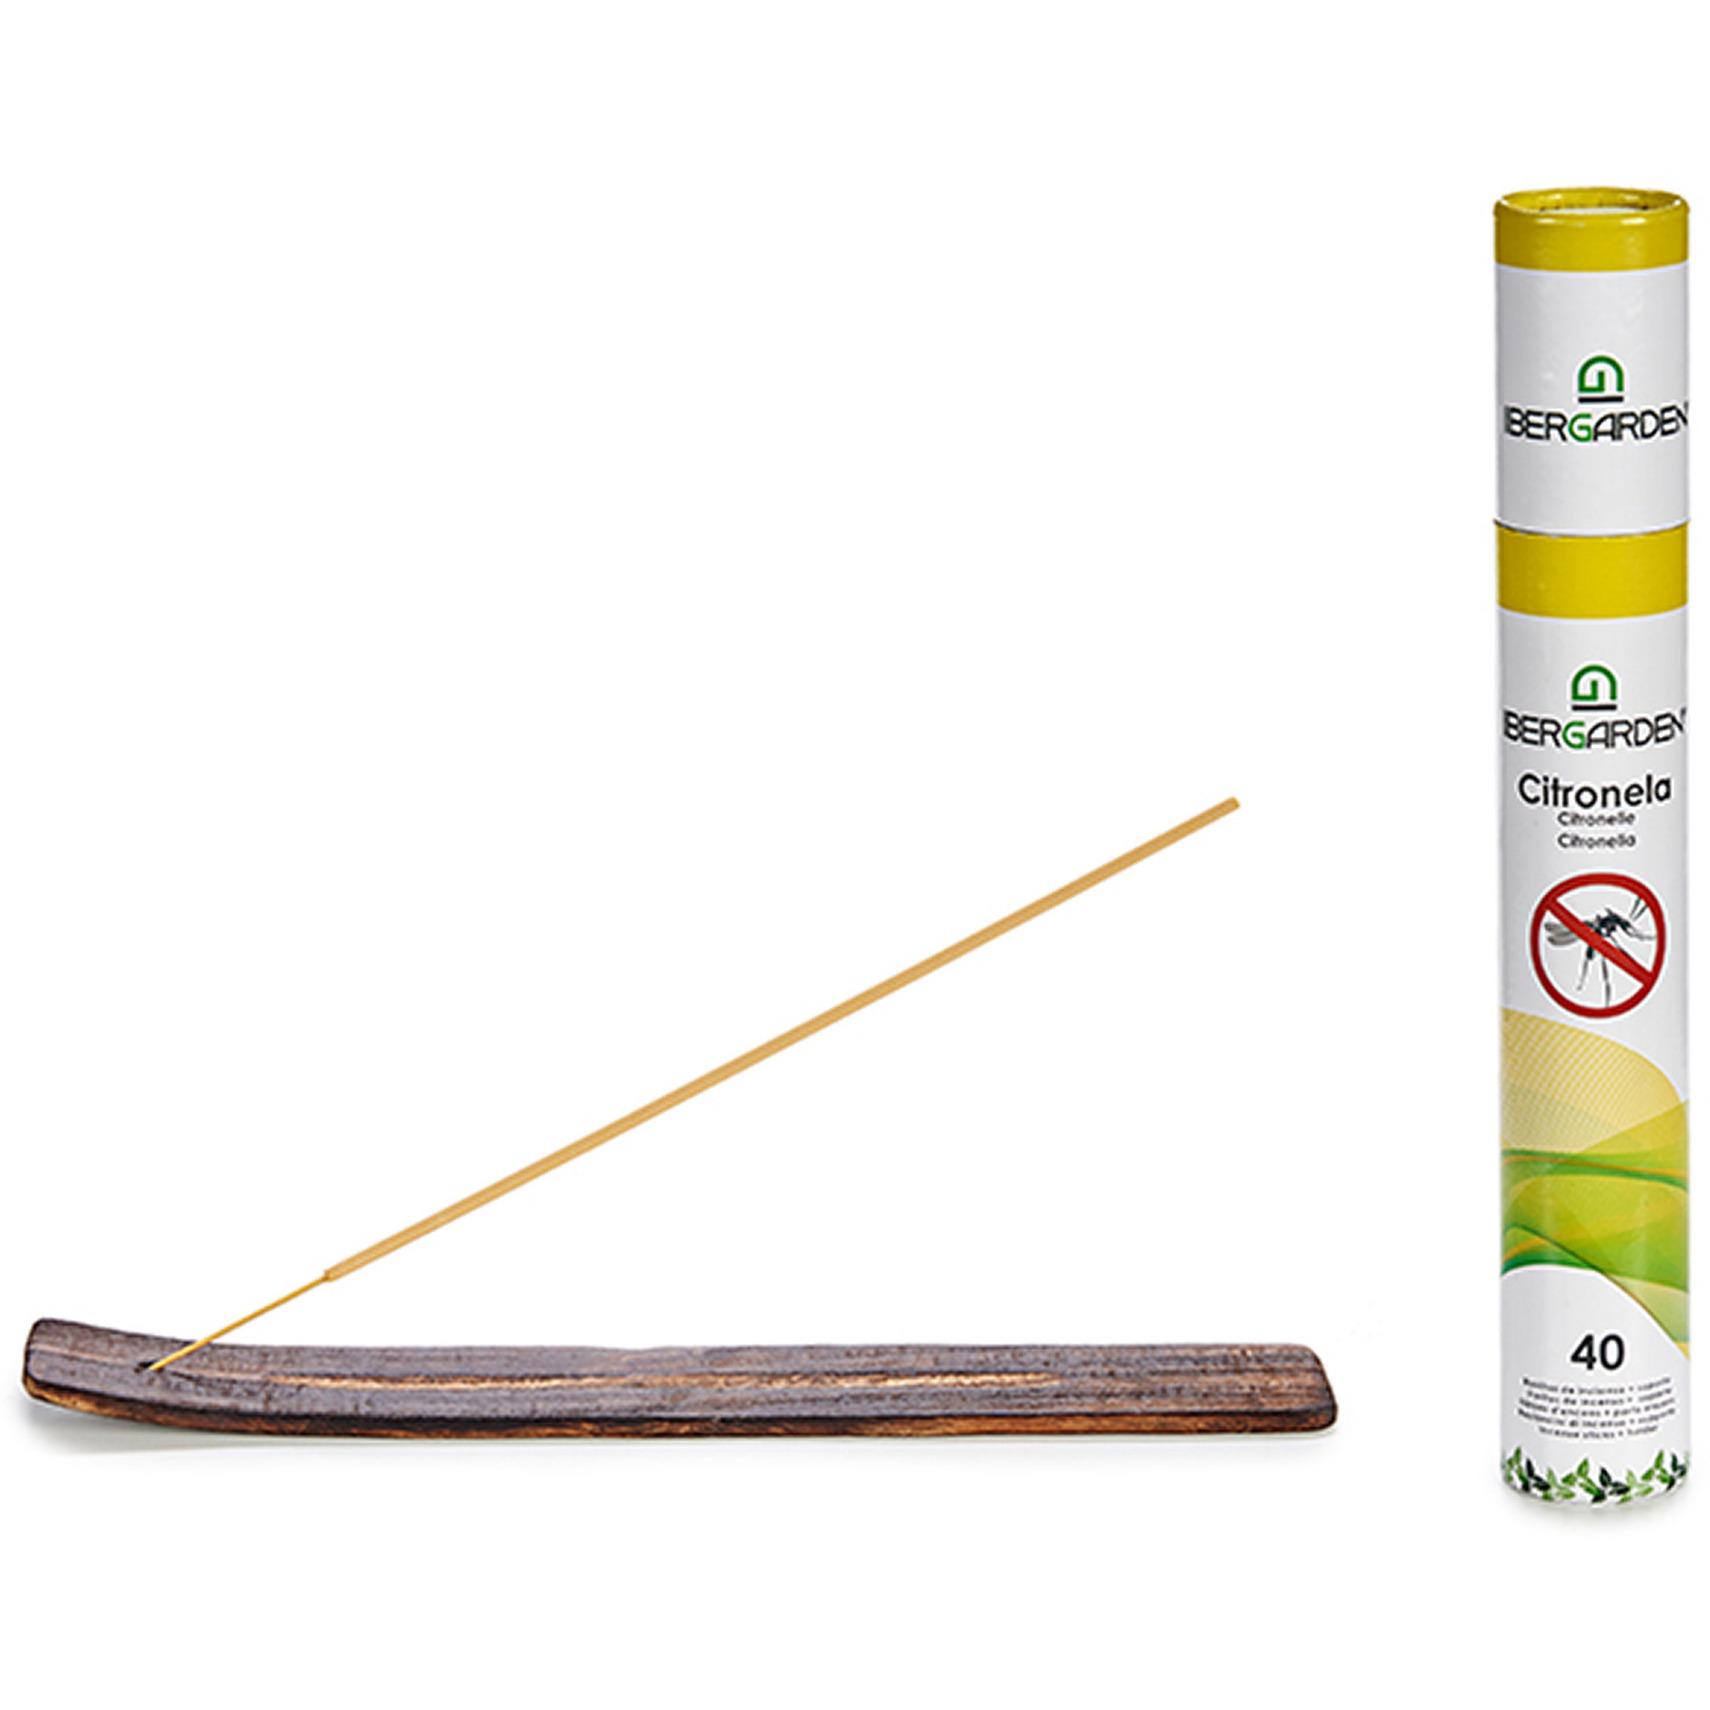 IBERGARDEN Citronella wierrook sticks - met houder/plankje - 40x sticks - 32 cm -